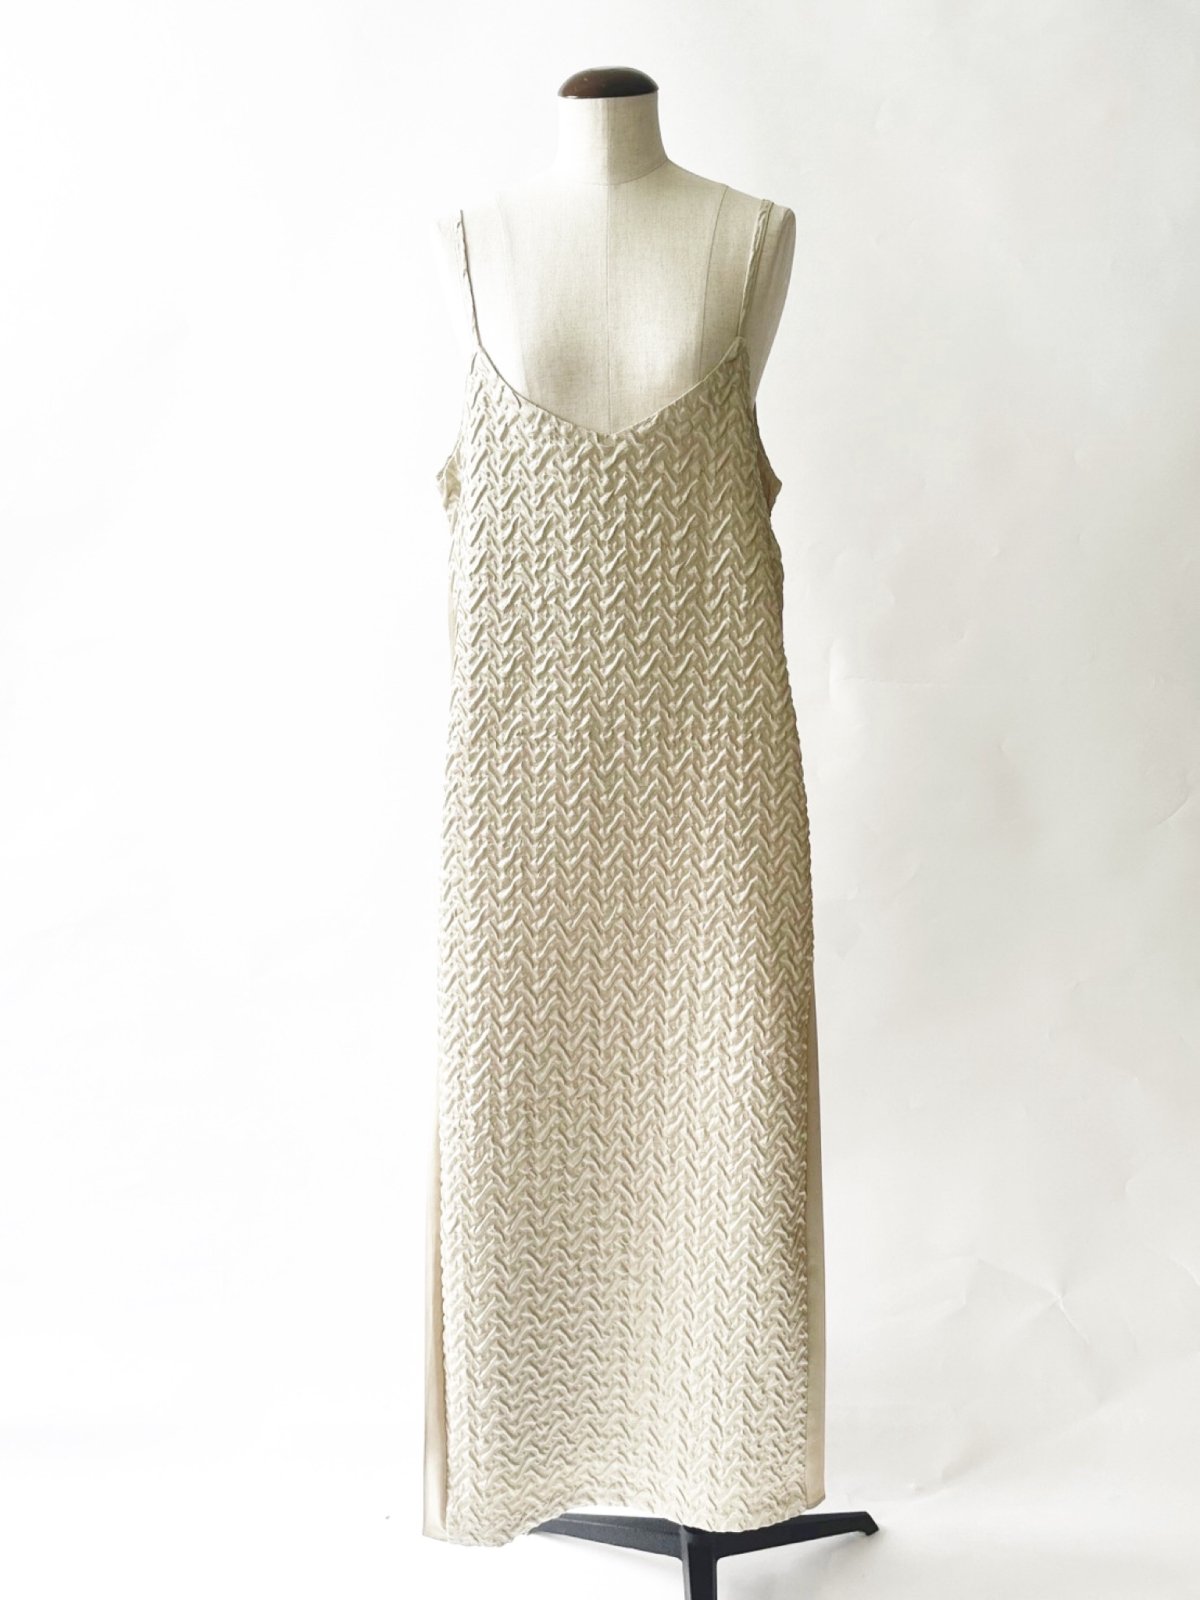 Jacquard side pleats dress / cream